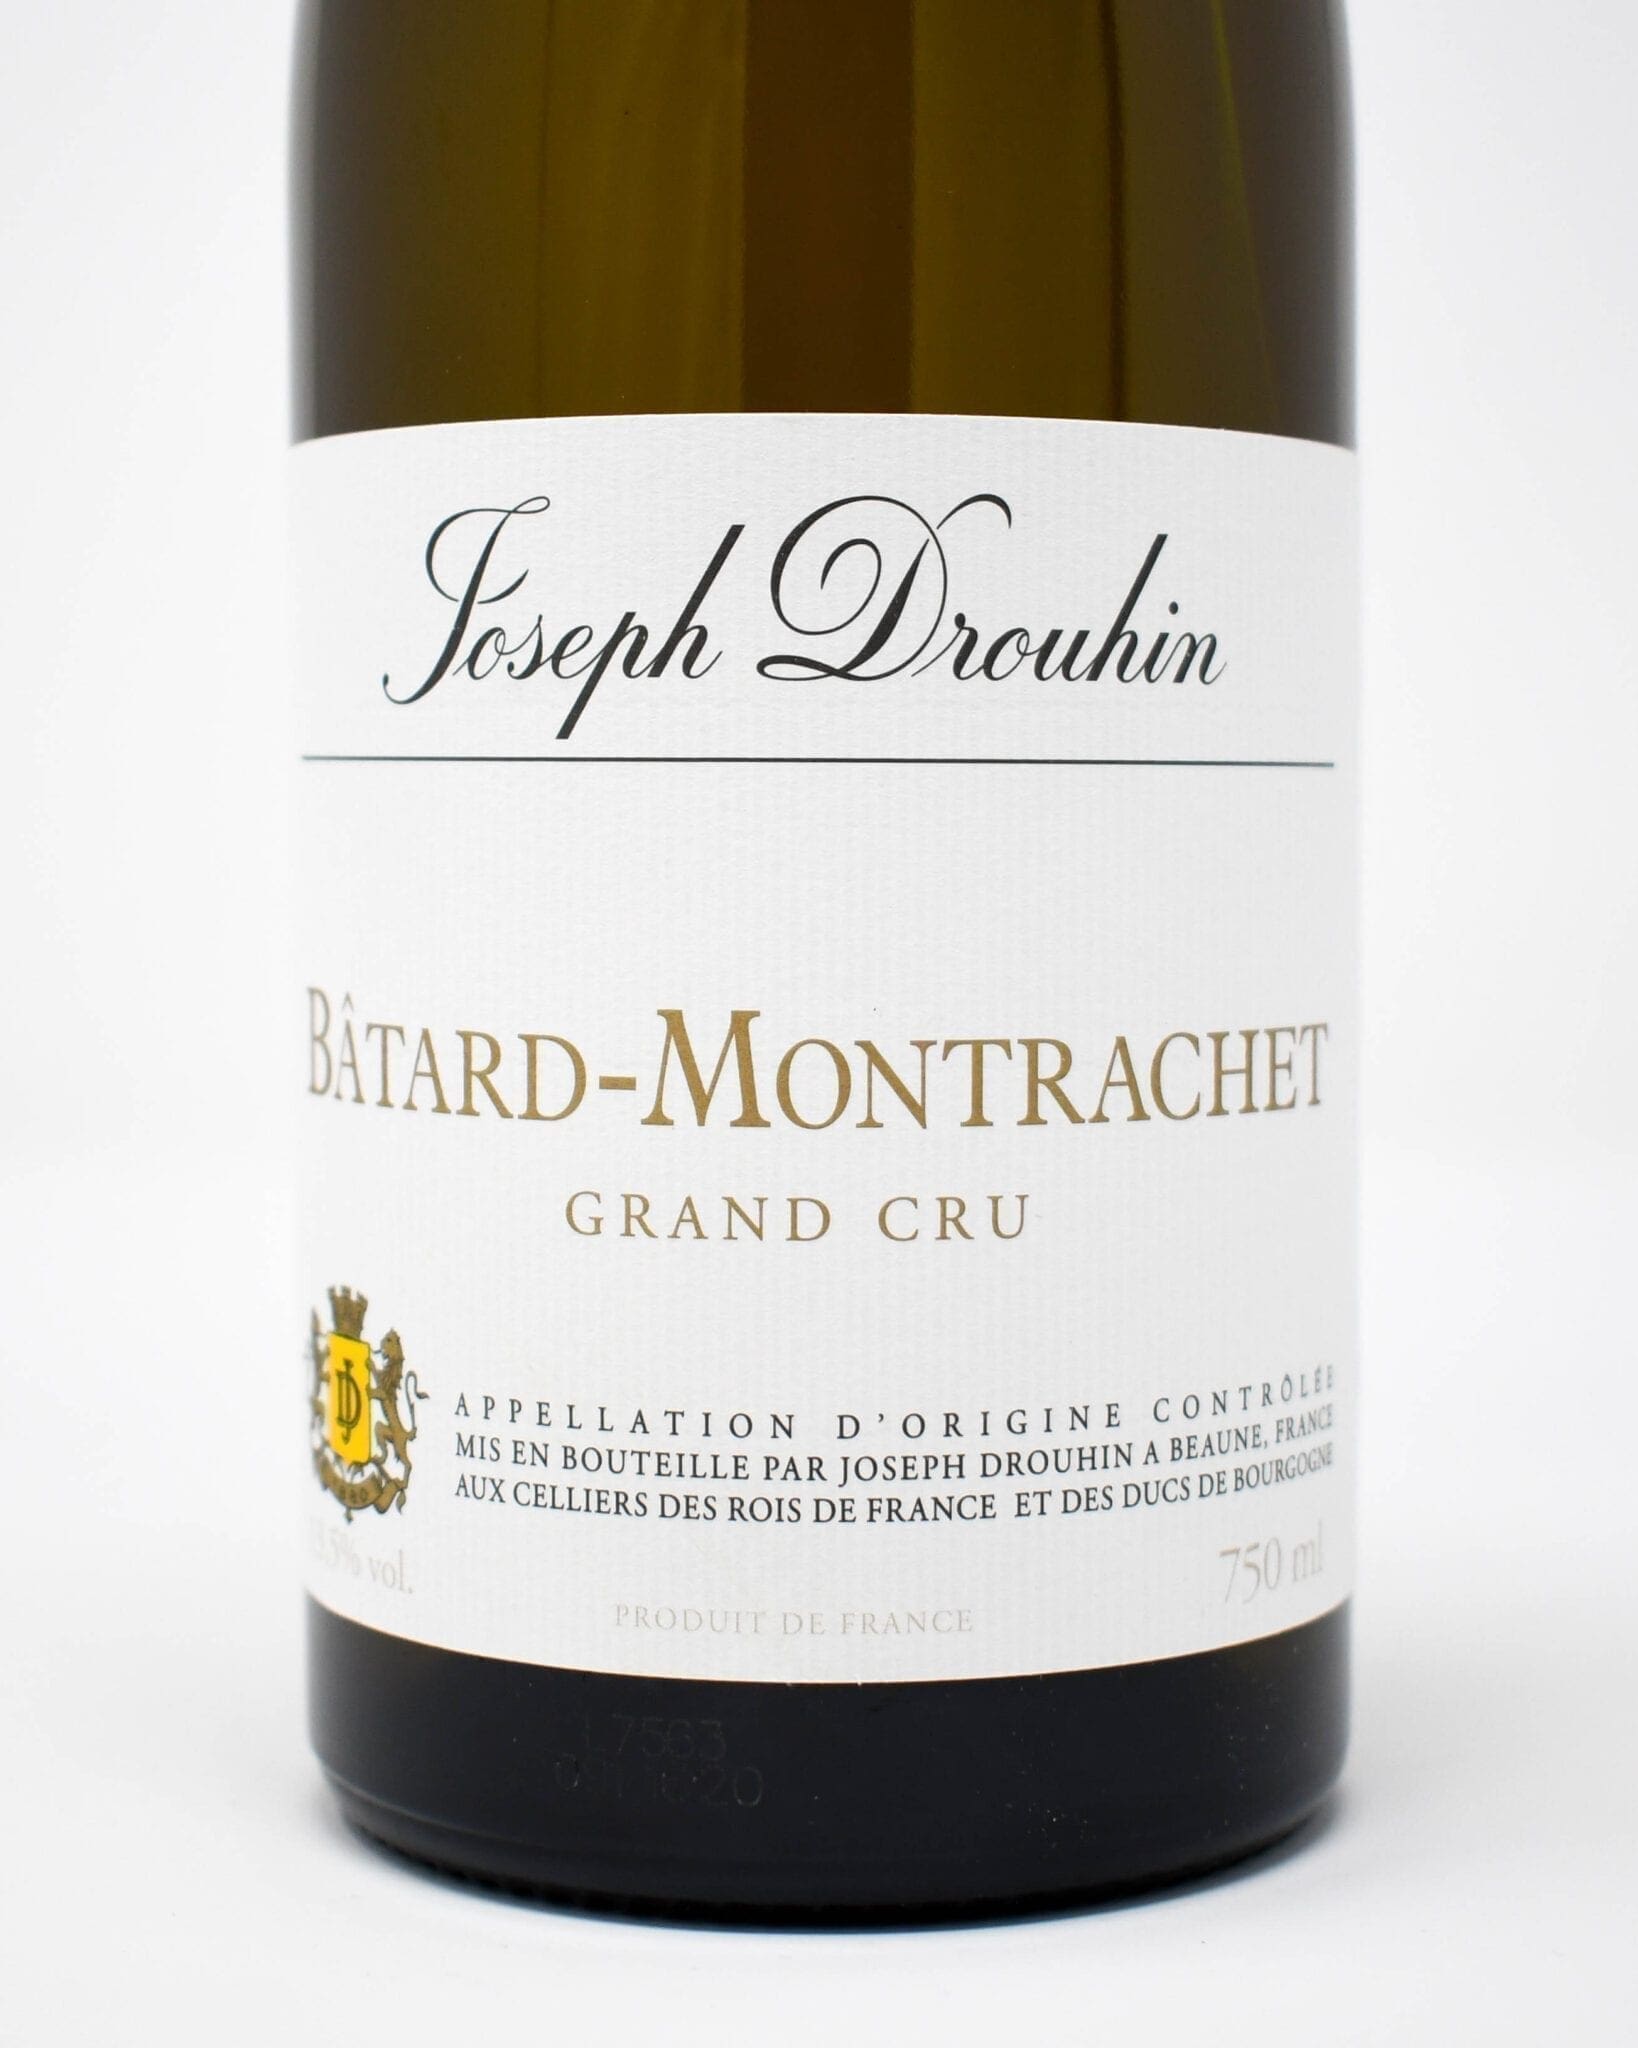 Joseph Drouhin, Batard-Montrachet, Grand Cru